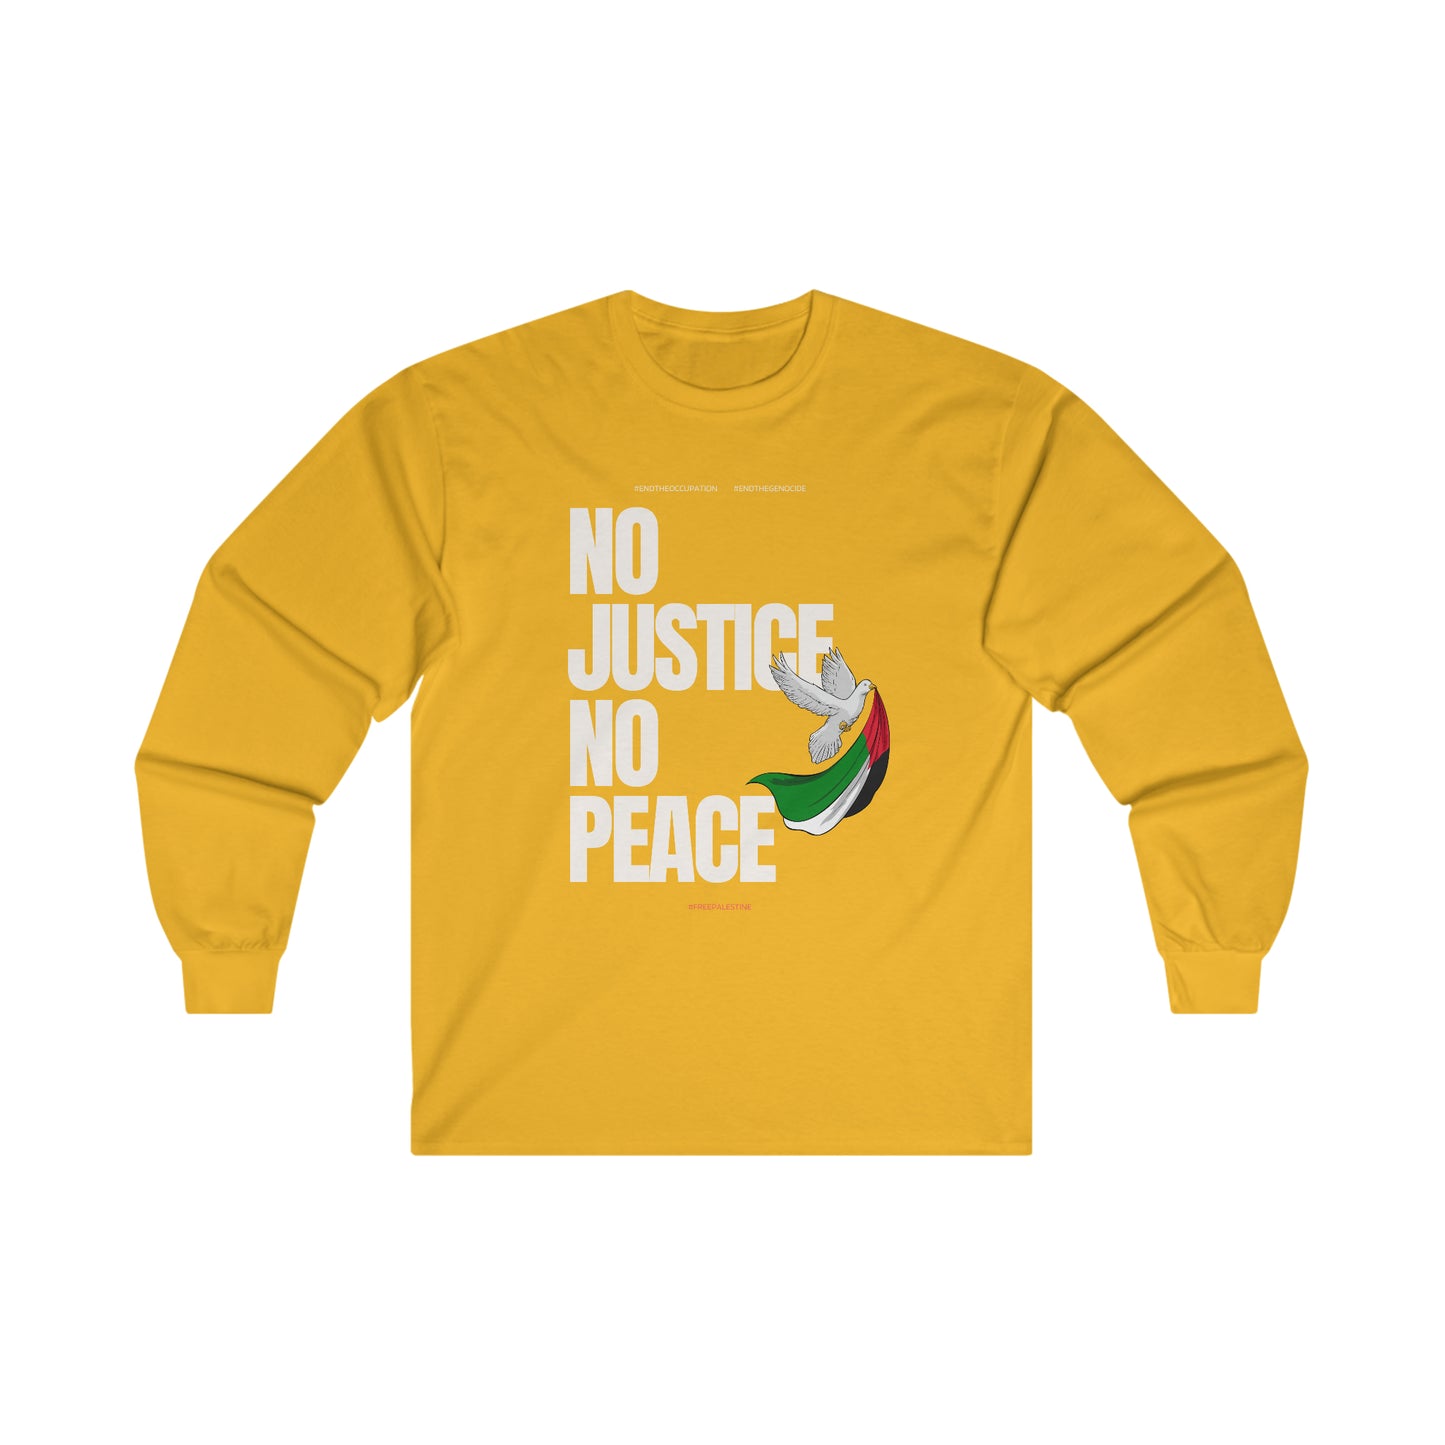 NO JUSTICE, NO PEACE | Long Sleeve Tee